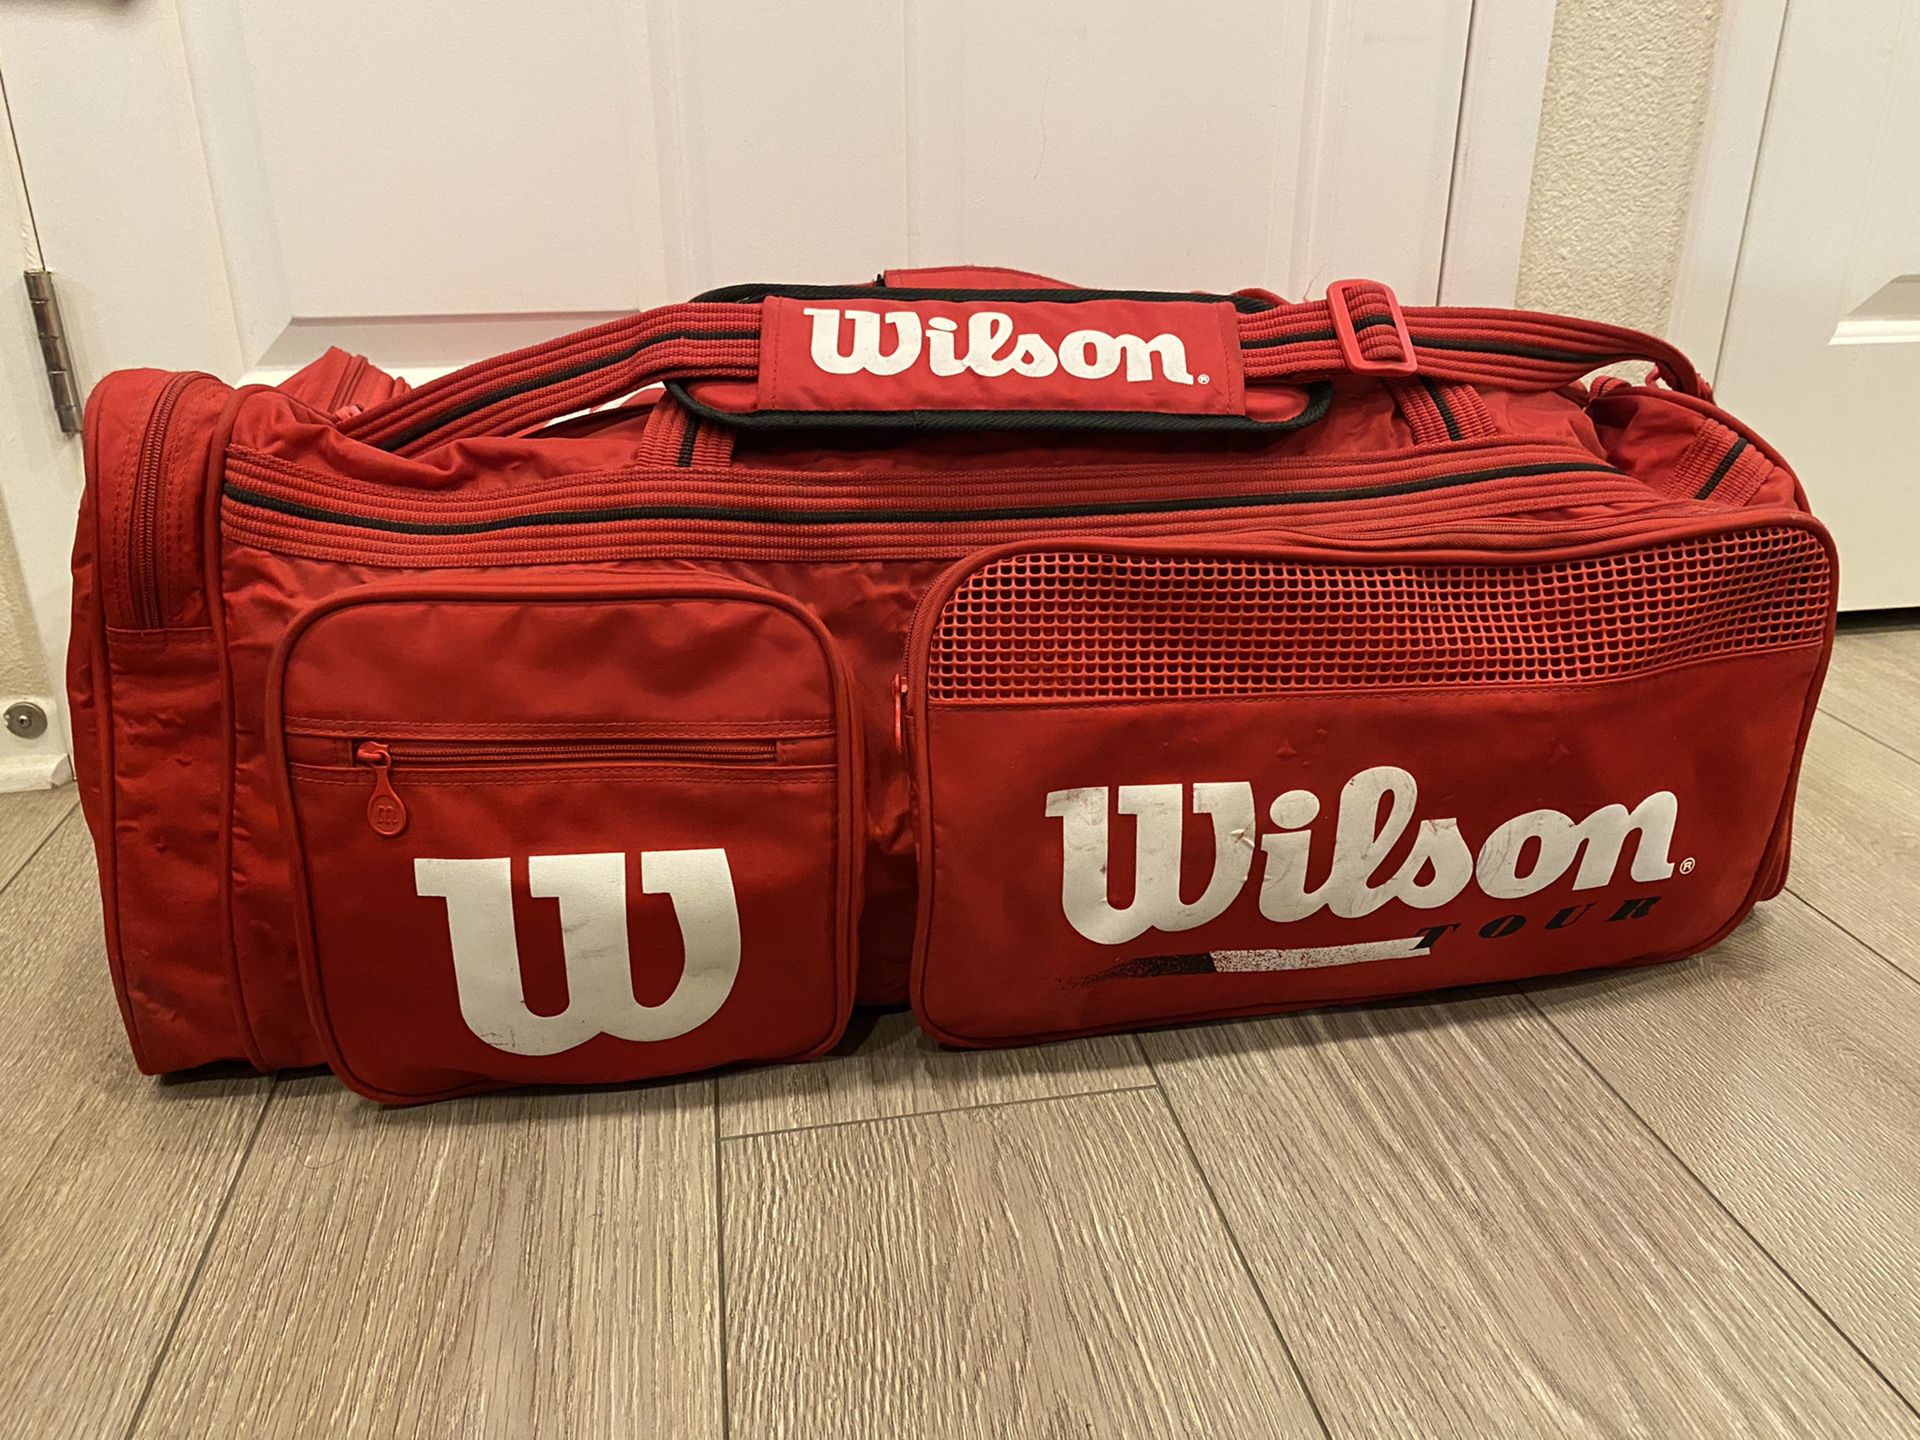 Wilson sports duffle bag